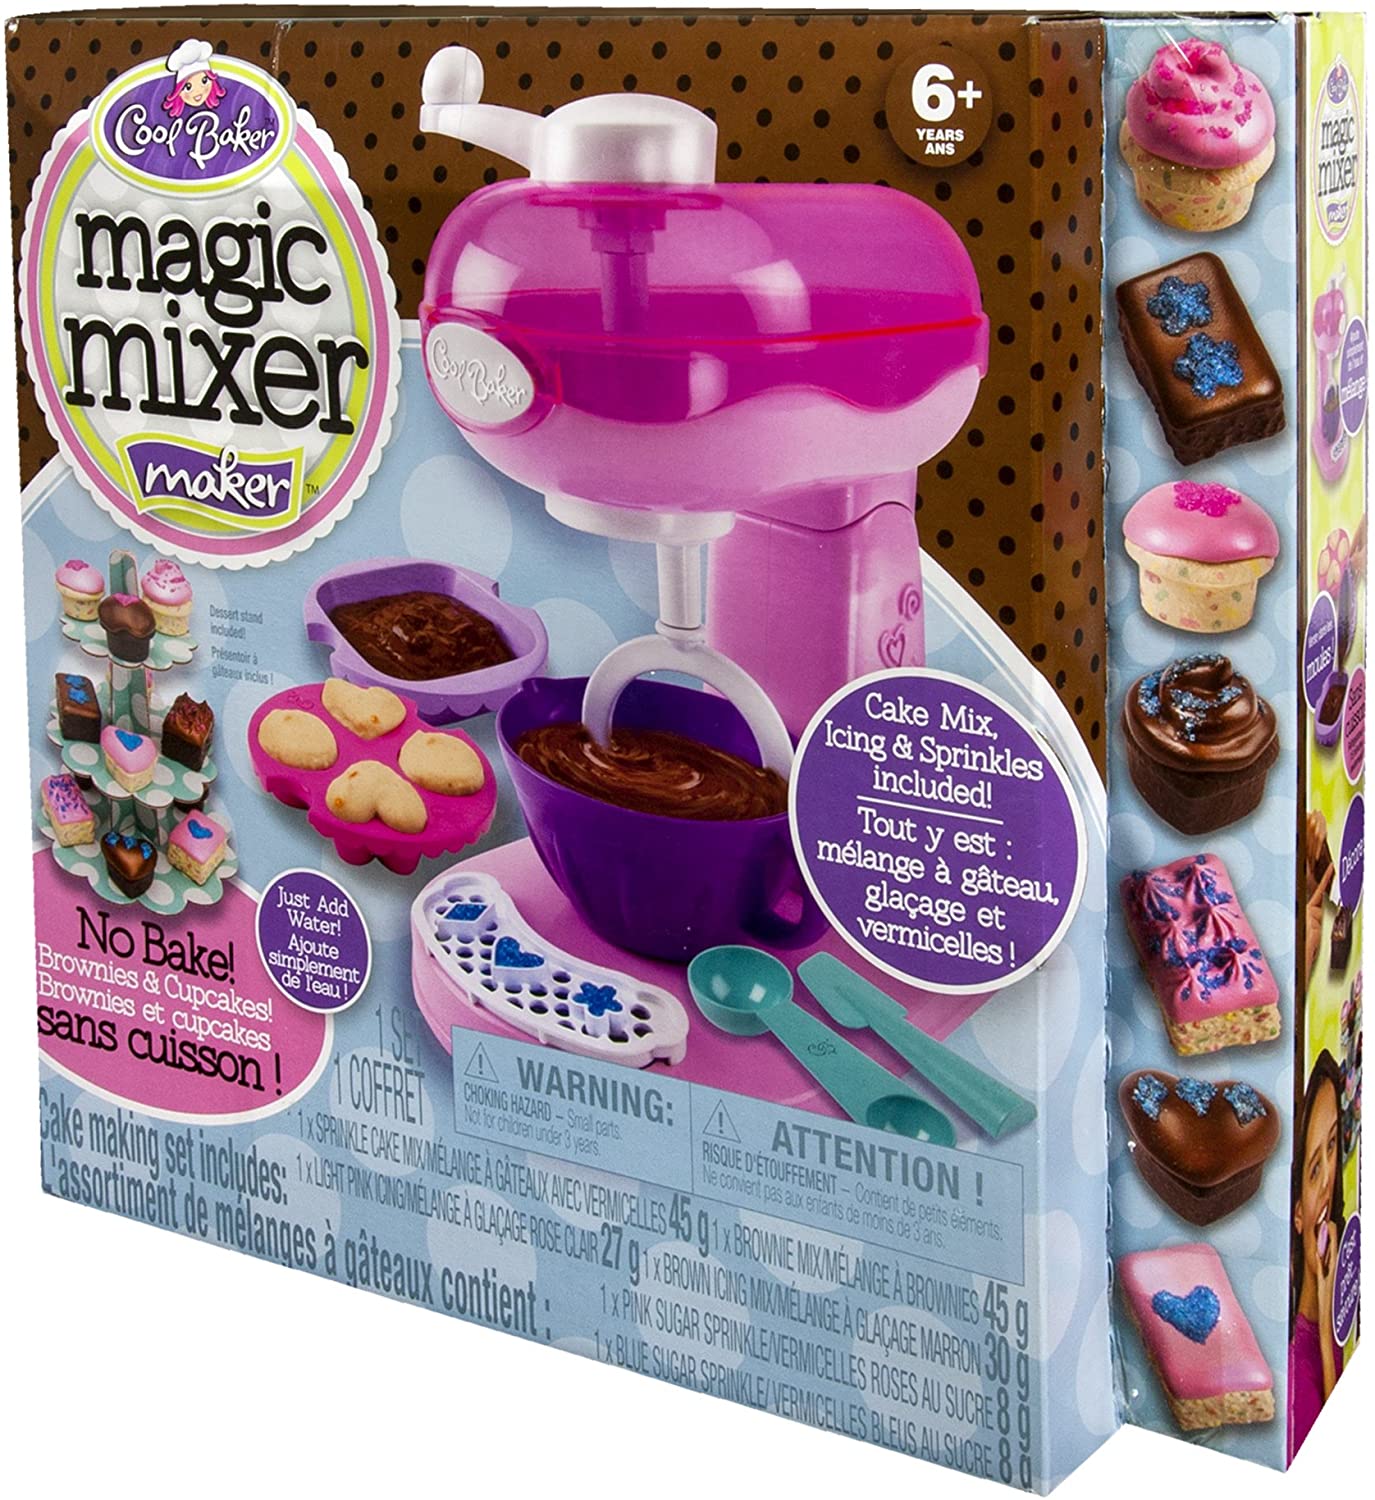 Cool Baker Magic Mixer Maker - Pink - Wal-Mart Exclusive 